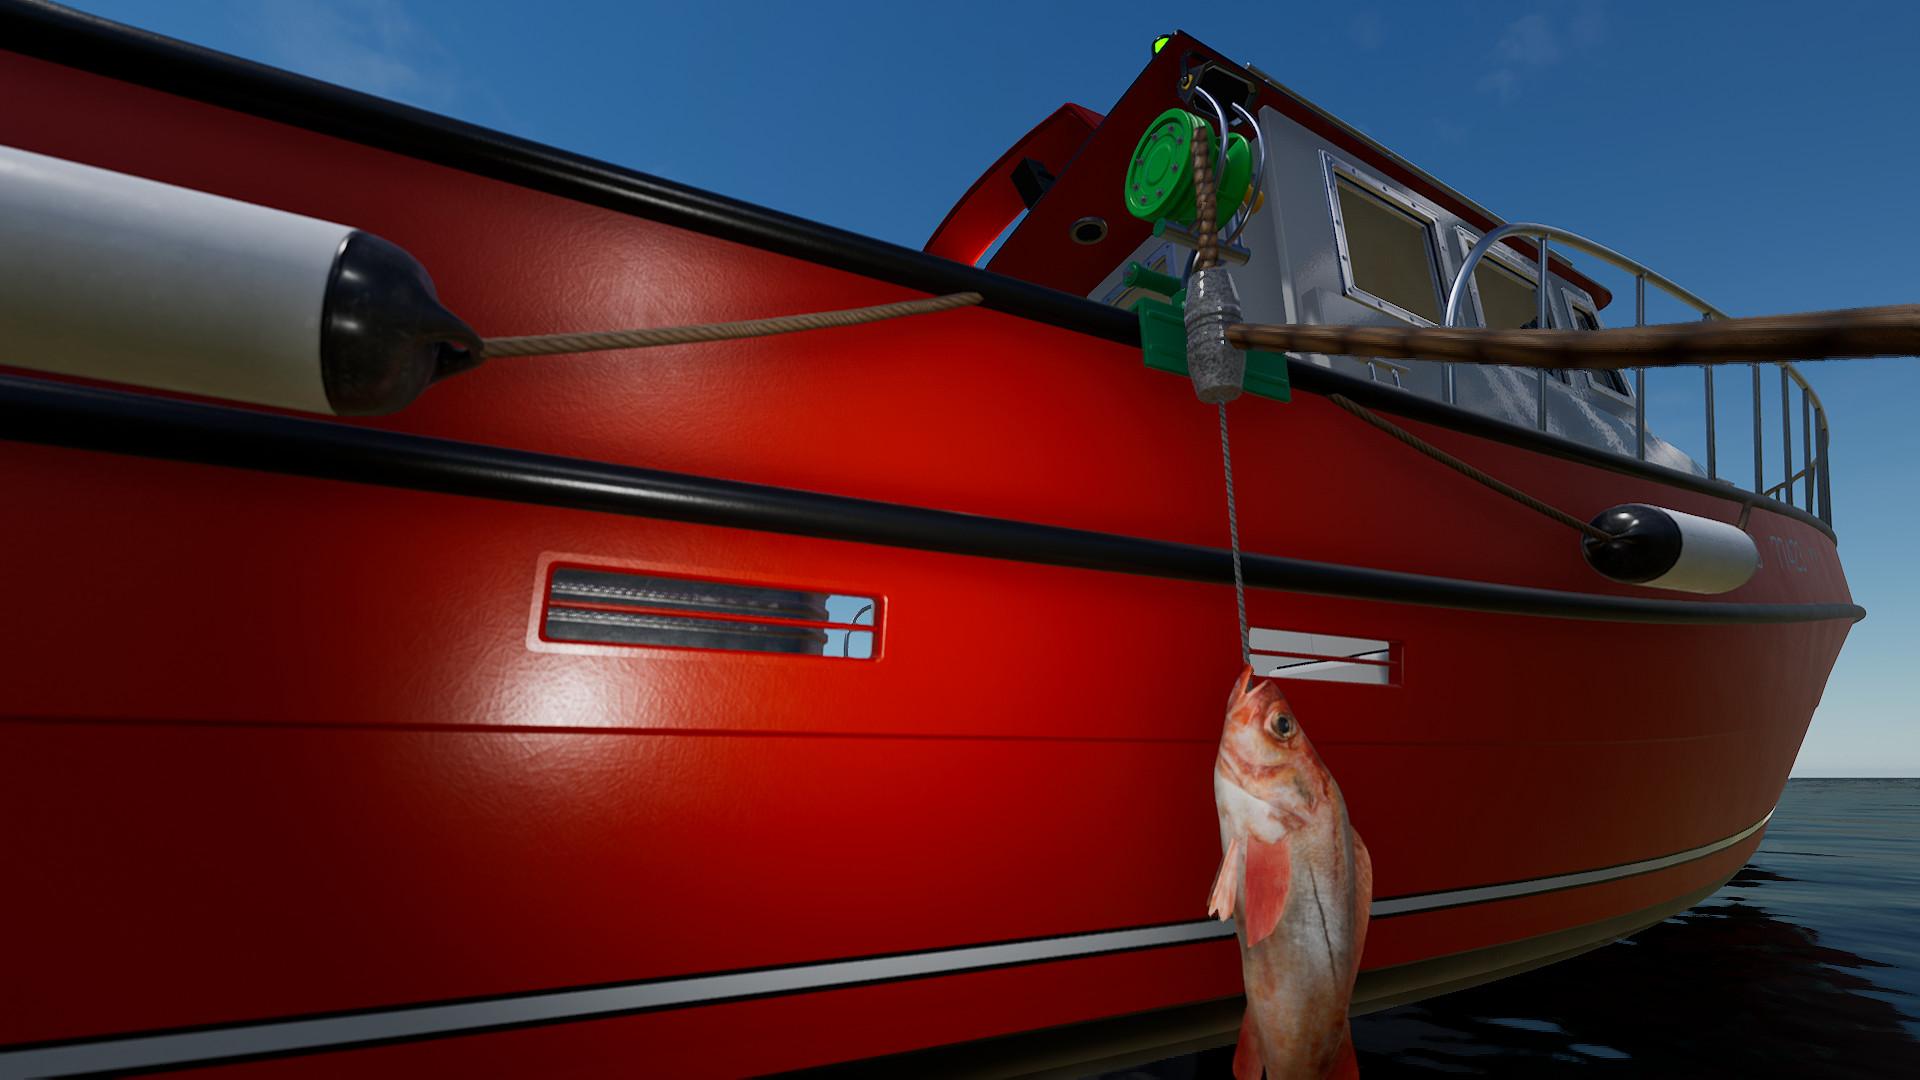 Screenshot №18 from game Fishing: North Atlantic - Enhanced Edition